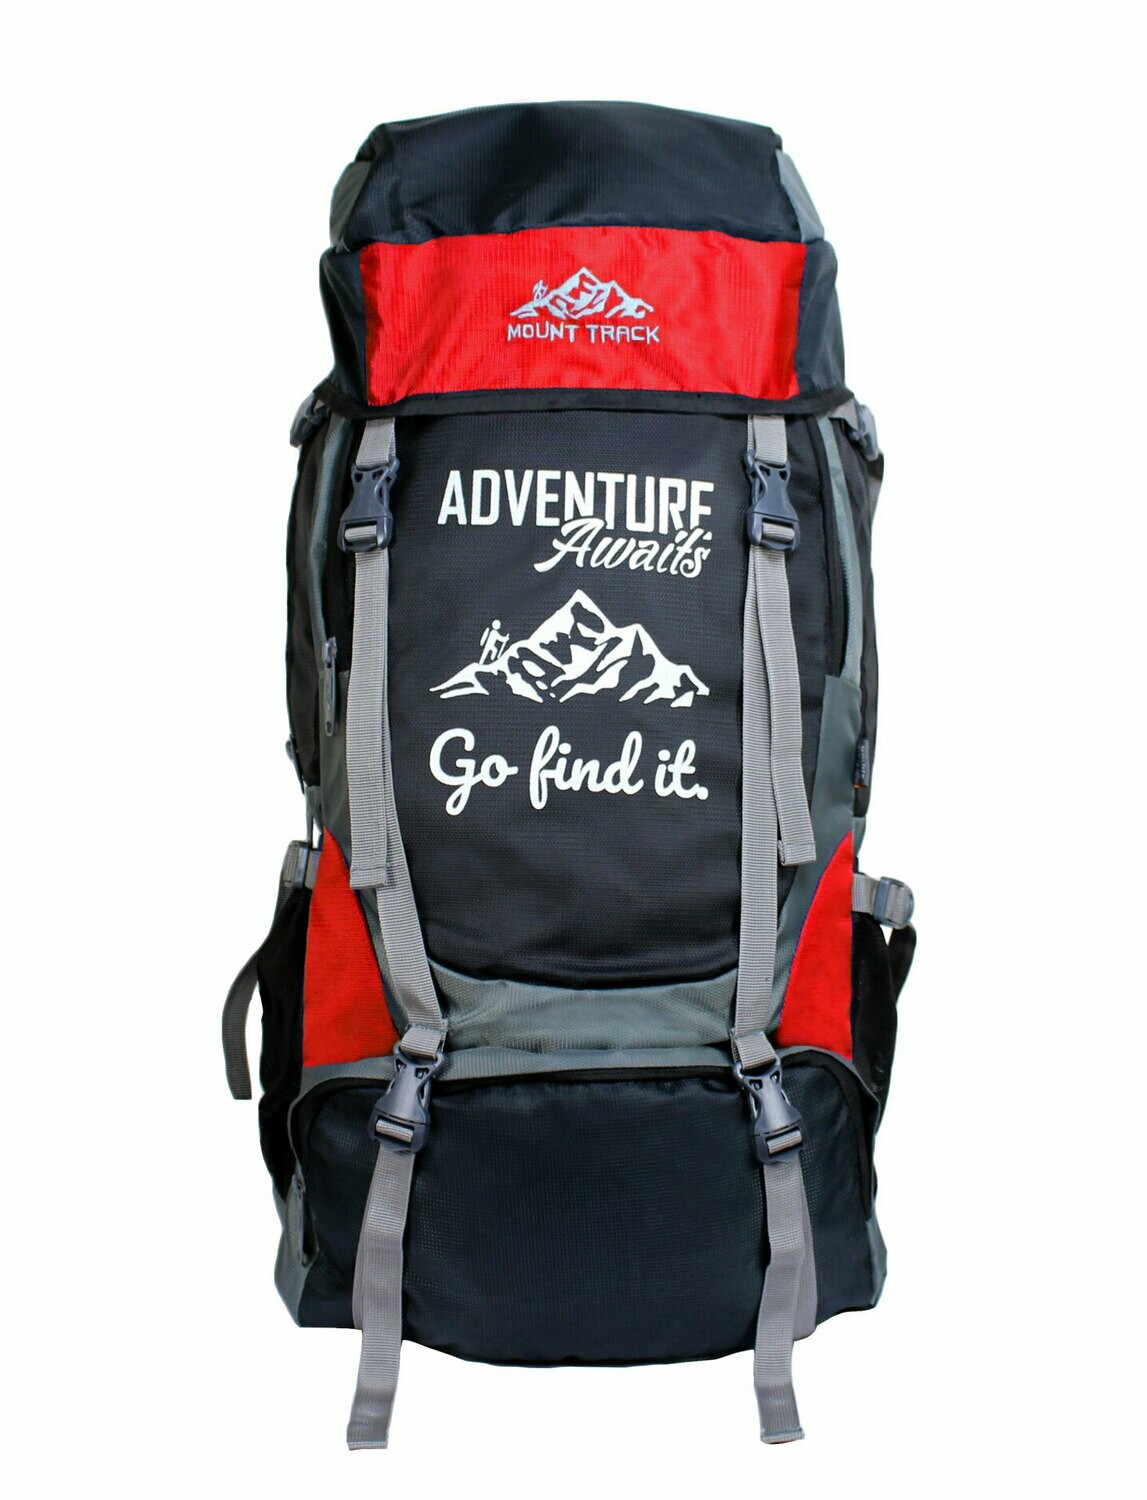 Mount Track Adventure 55 Ltrs Rucksack, Hiking backpack